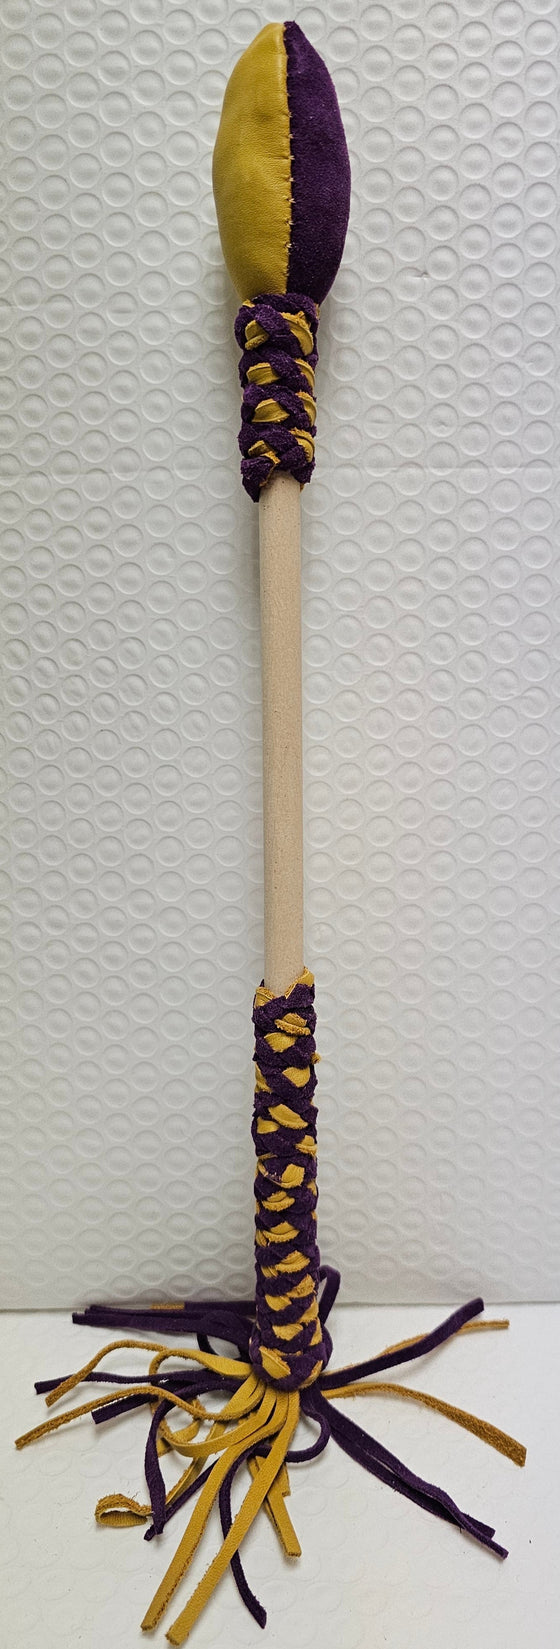 Tan and purple drum stick